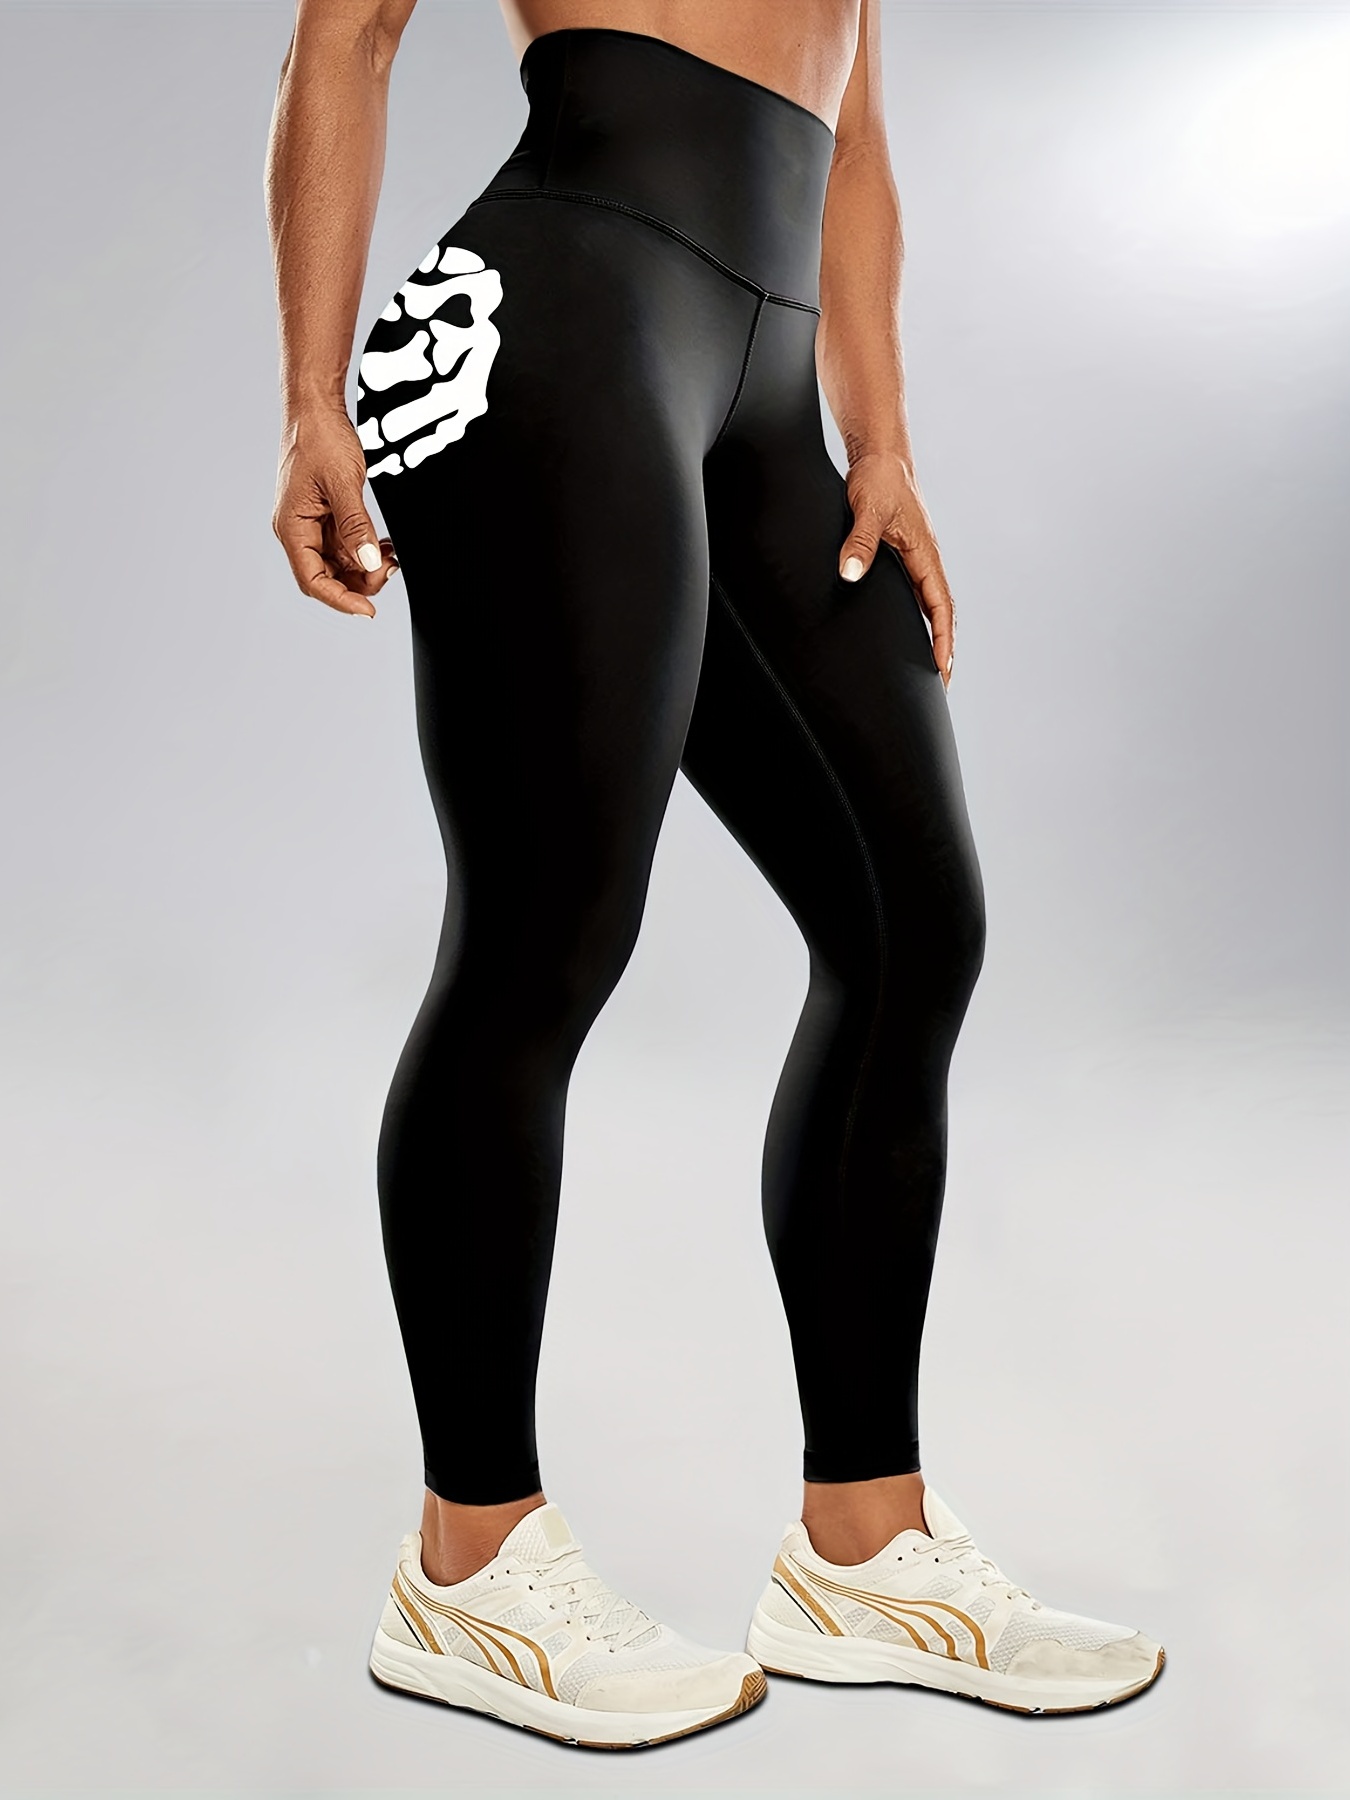 Plus Size S-5XL Fashion Women Yoga Shorts Skeleton Hands Tight